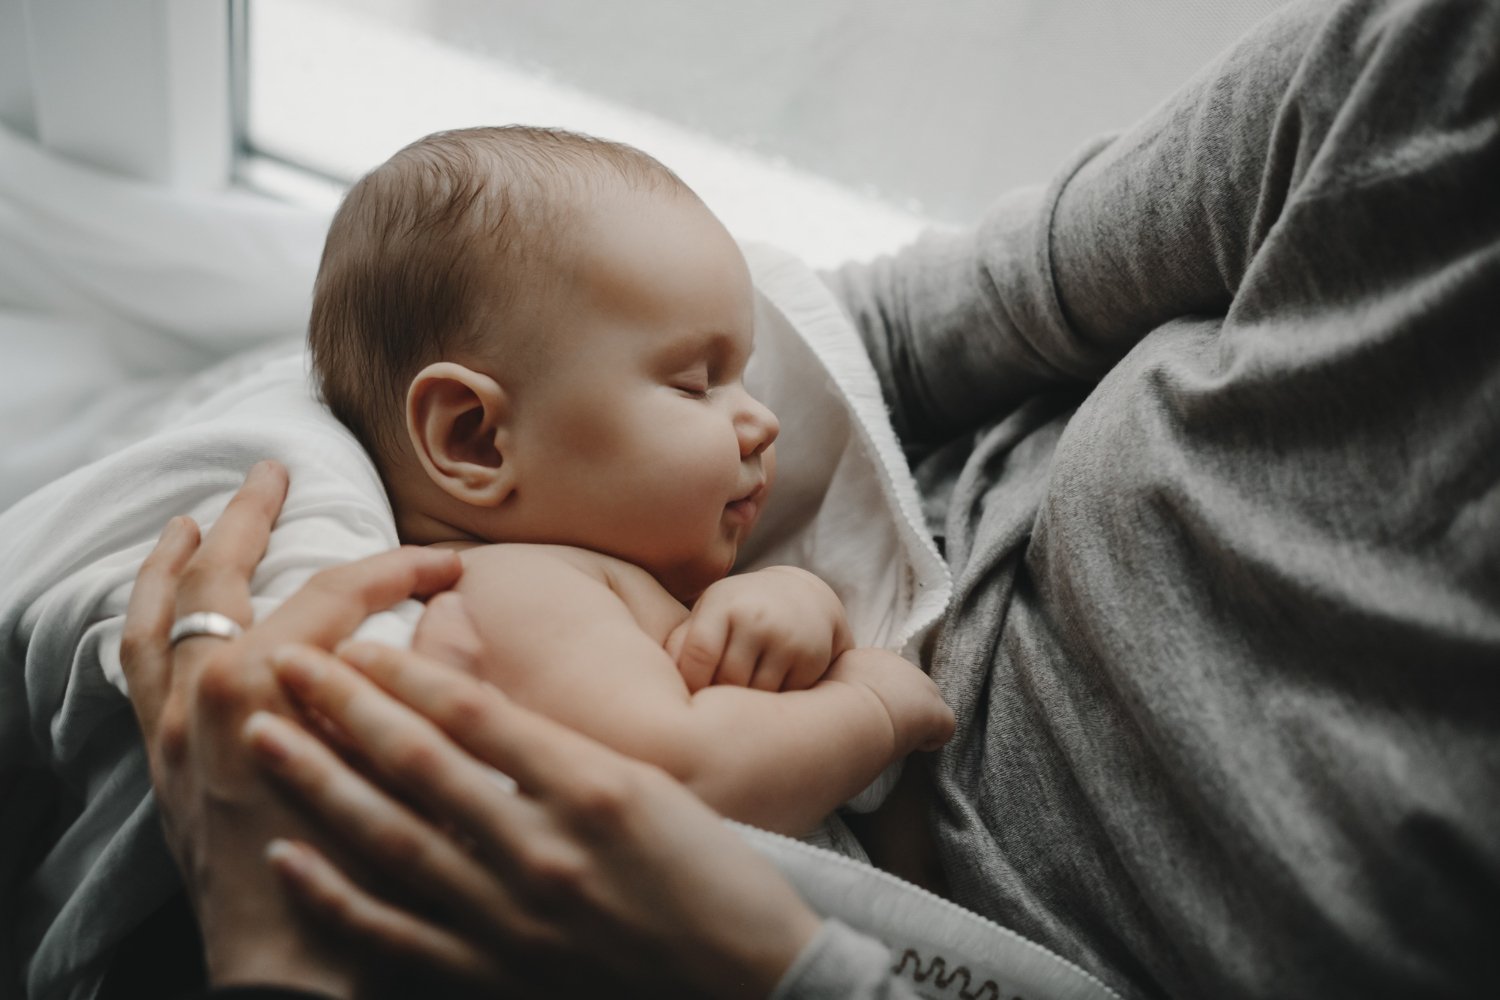 Newborn insurance coverage